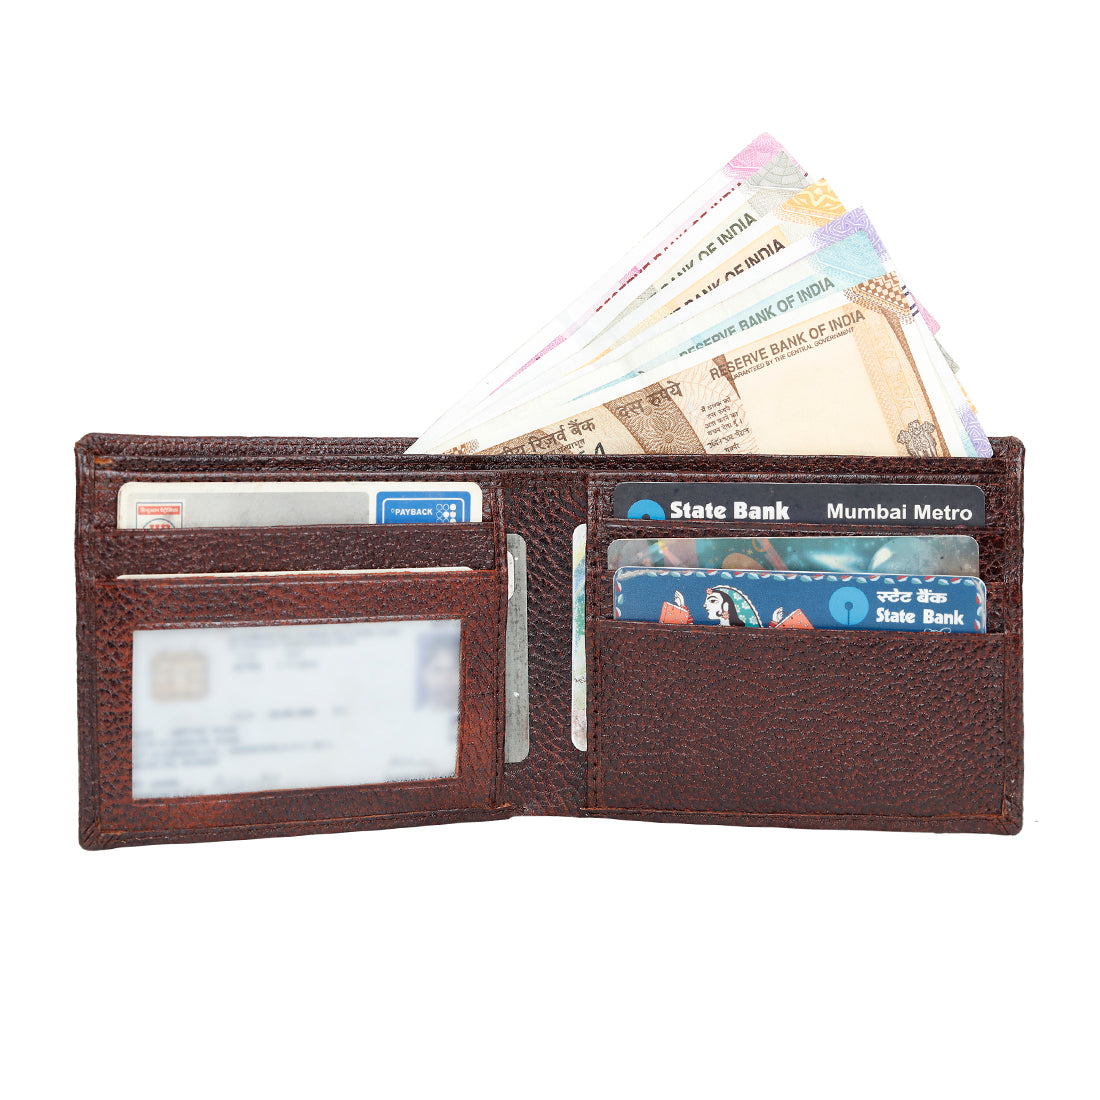 Genuine Grained Leather Trailblazer Wallet For Men